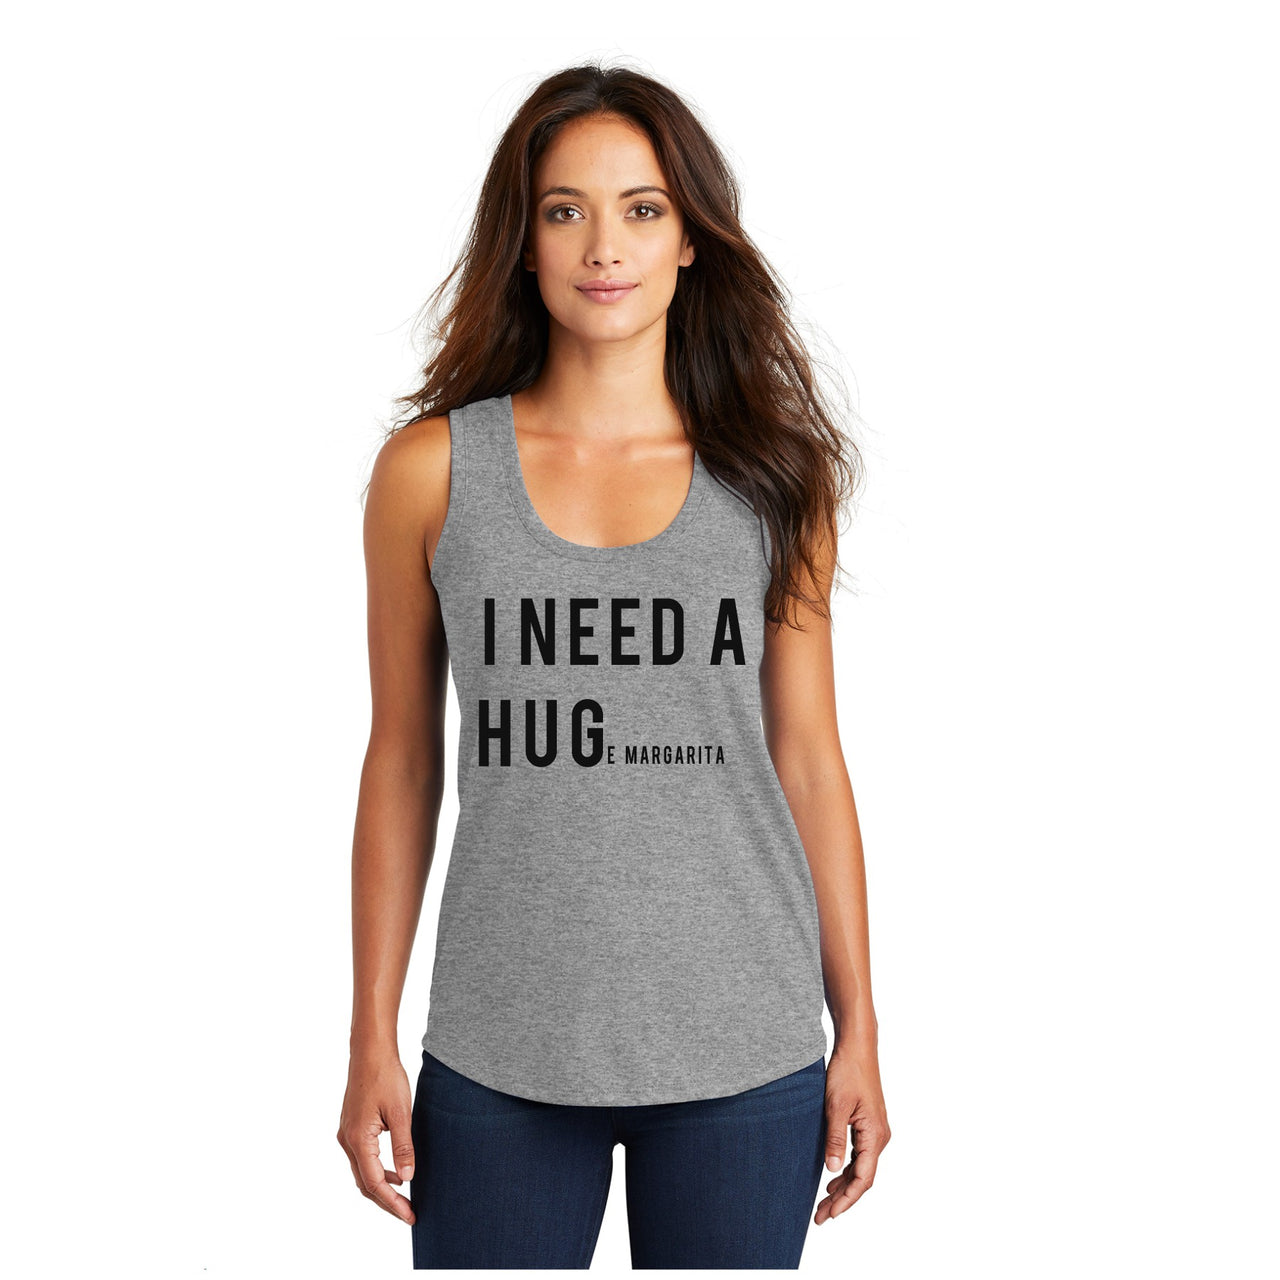 I Need  Hug E Margarita - Racerback Tank (2XL Available)